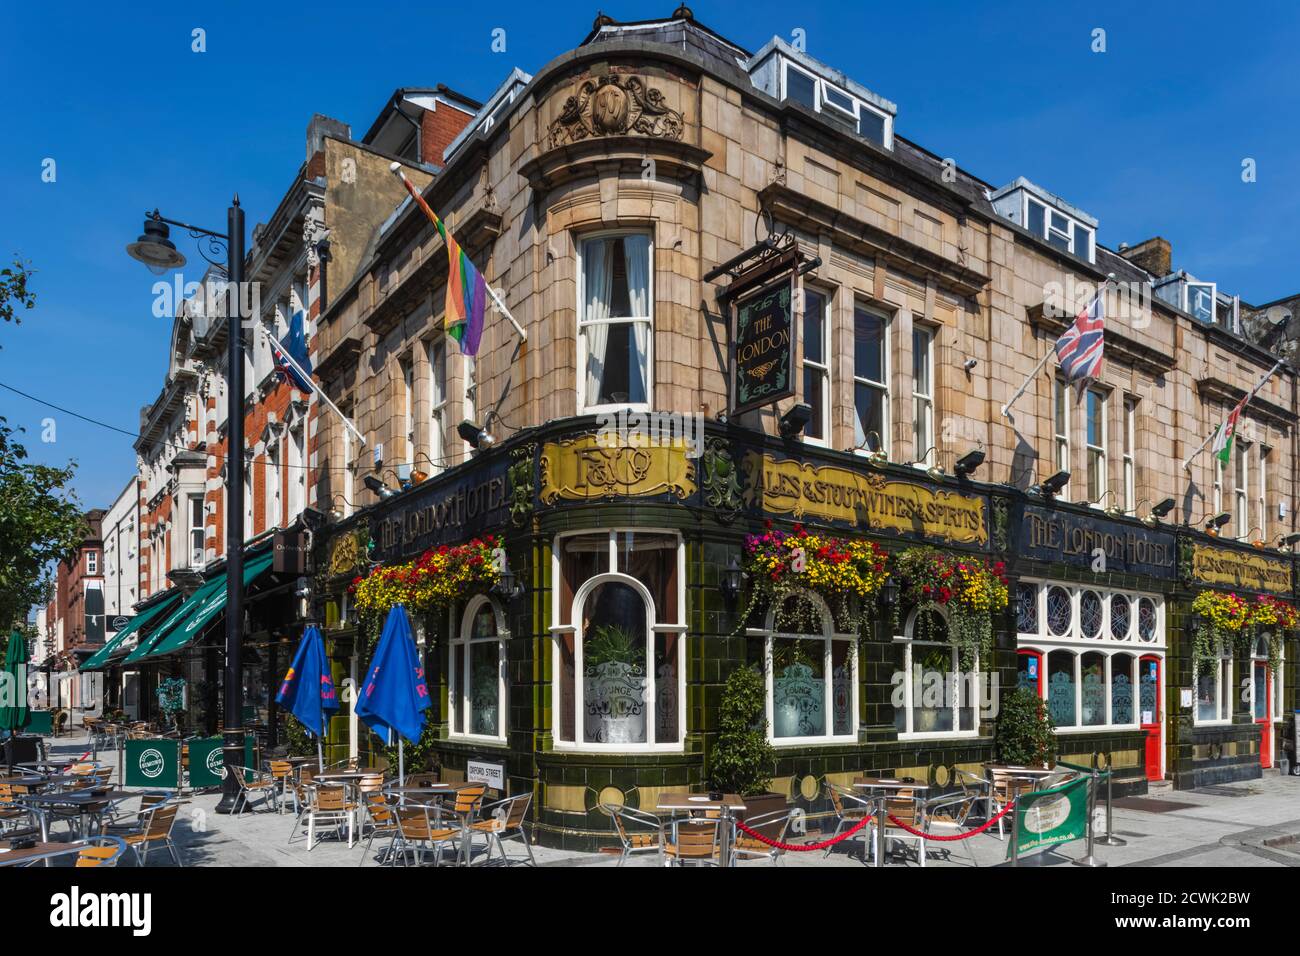 England, Hampshire, Southampton, Oxford Street, das farbenfrohe viktorianische Era London Hotel und Pub Stockfoto